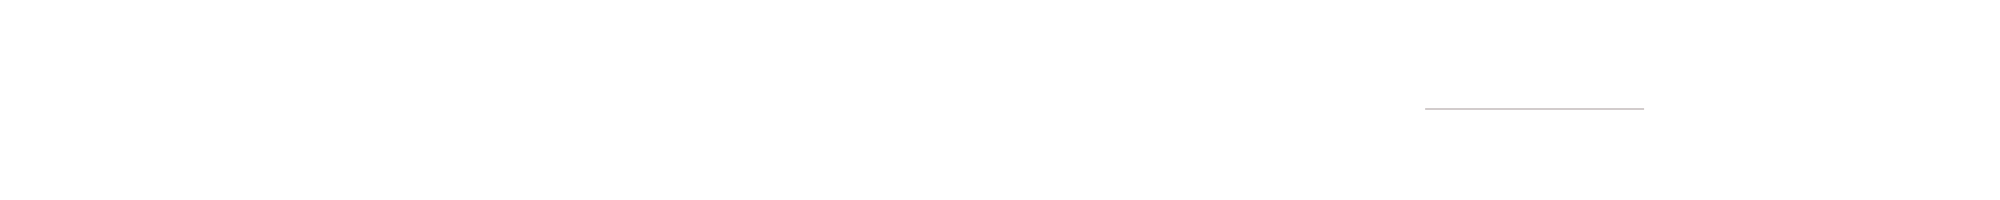 Versini-Campinchi, Merveille & Colin, société d'avocats